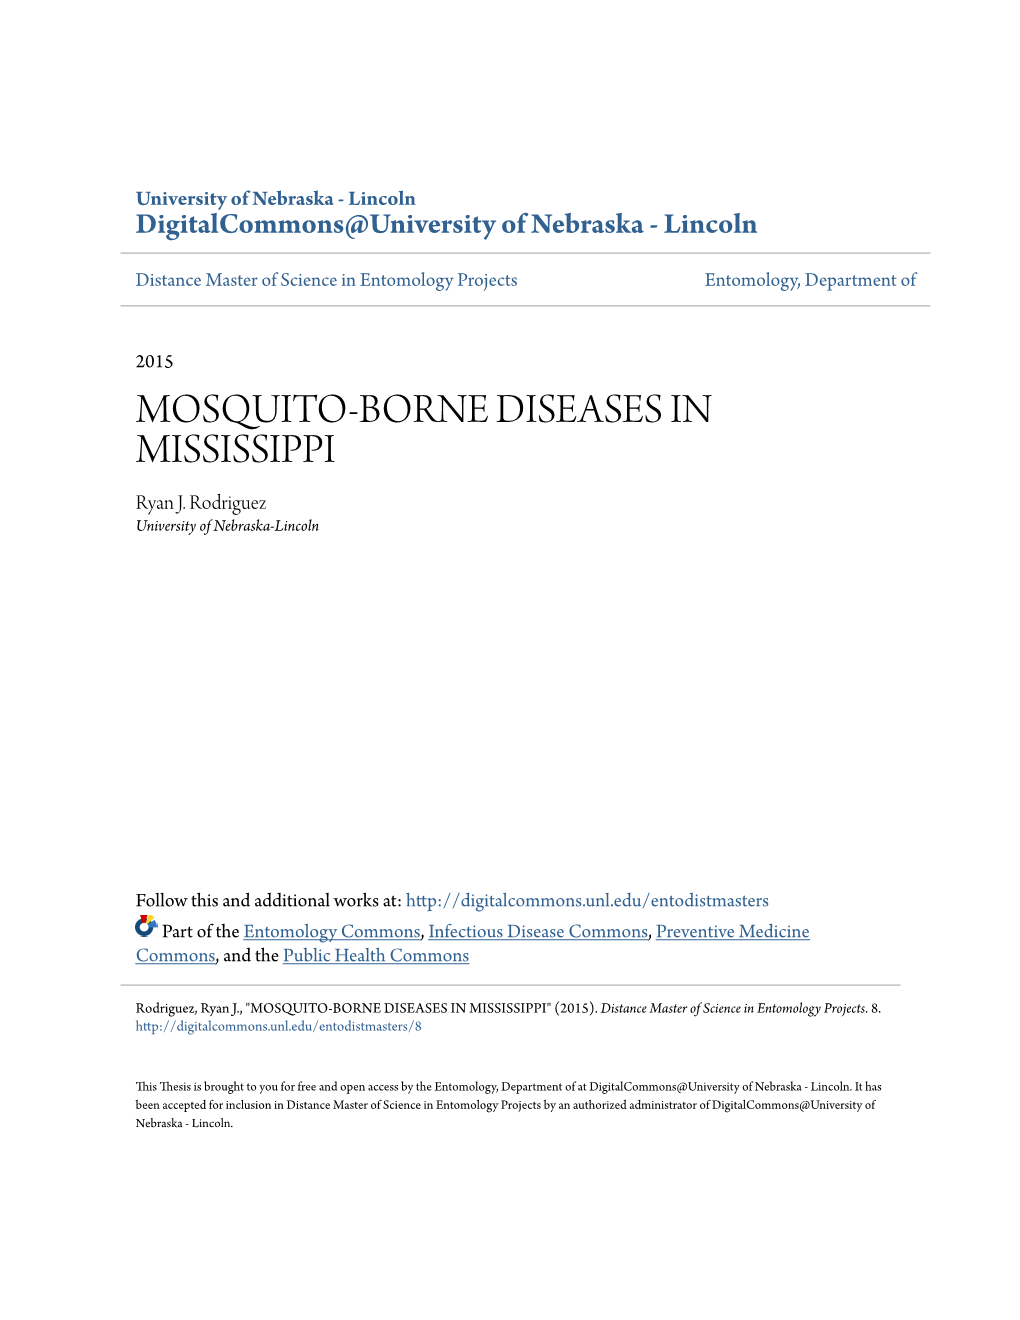 MOSQUITO-BORNE DISEASES in MISSISSIPPI Ryan J